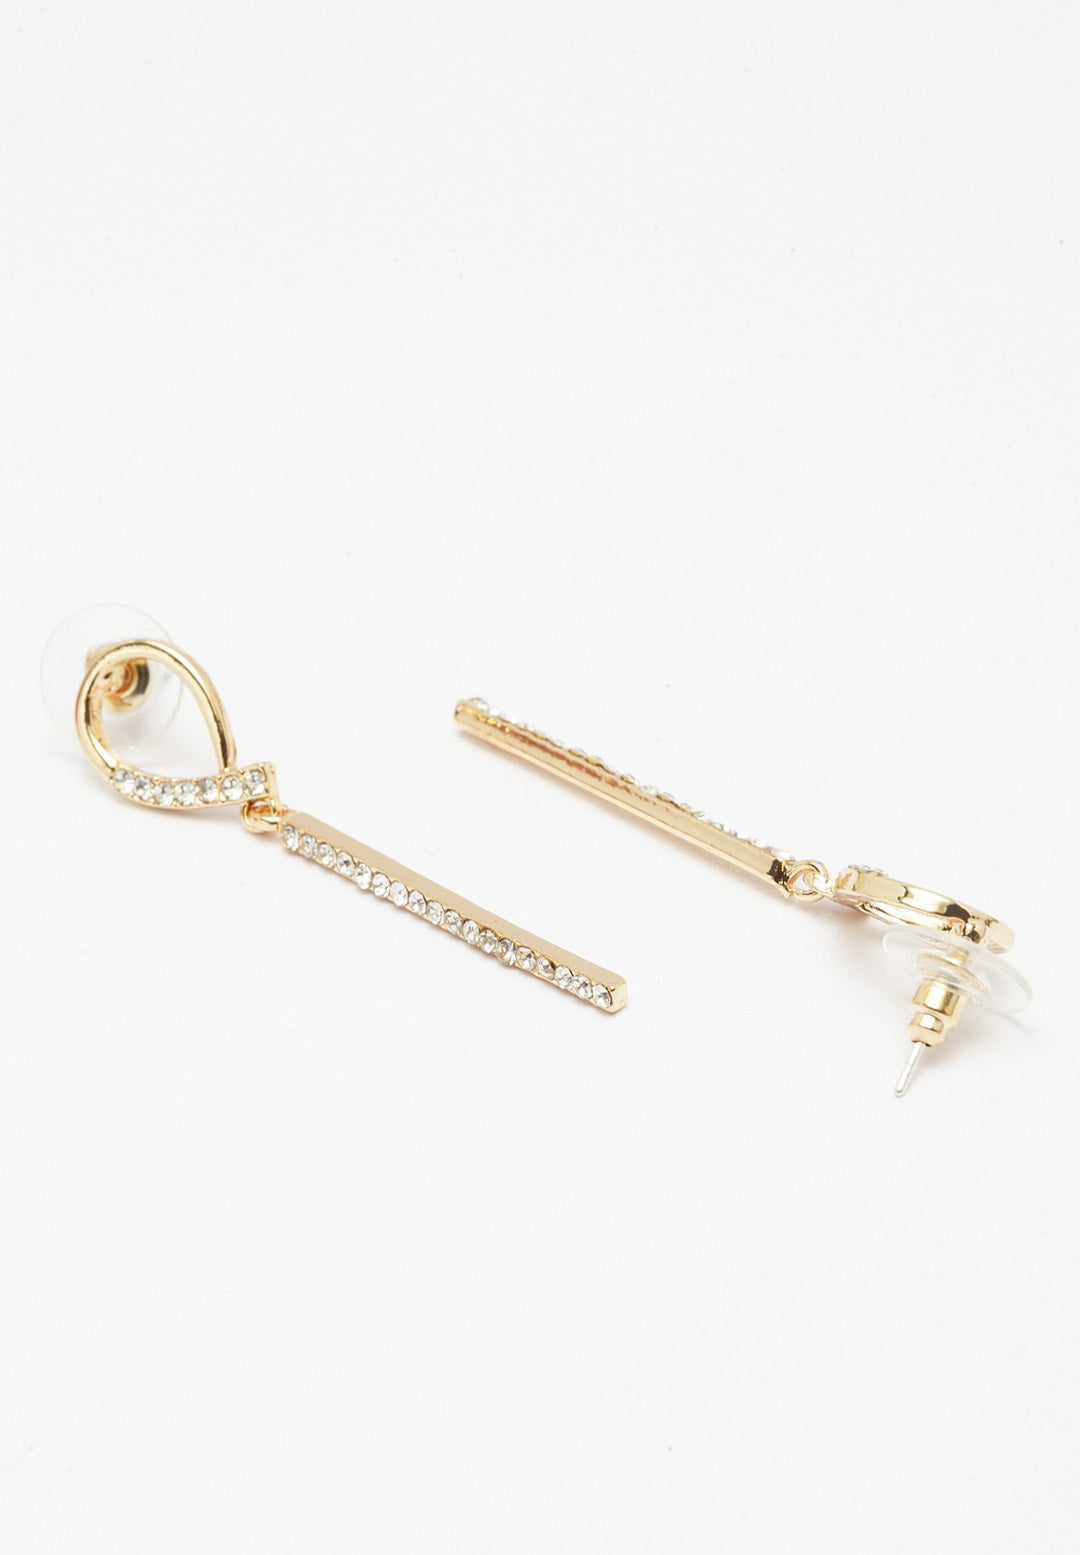 Avant-Garde Paris Luxe Gold-Plated Crytsal Dangling Earrings